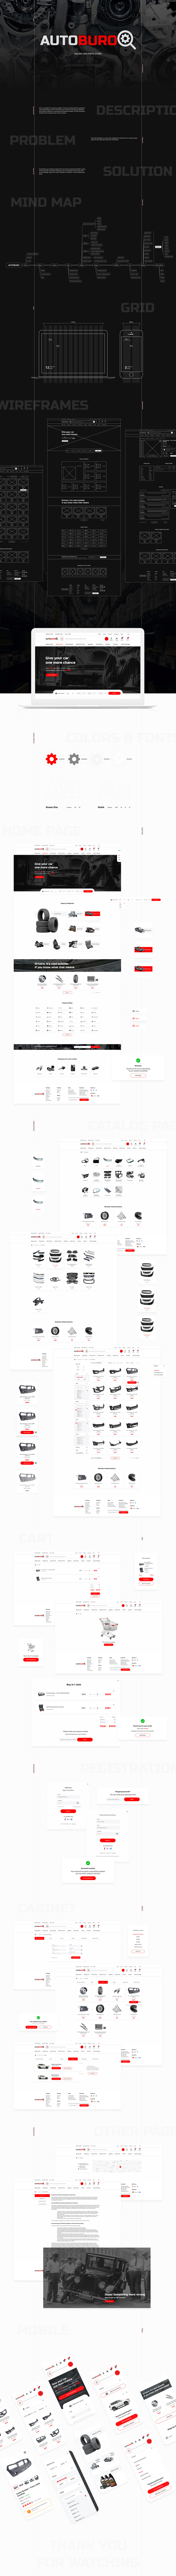 Auto Auto Parts car car parts Ecommerce store design ui design UX design web desing